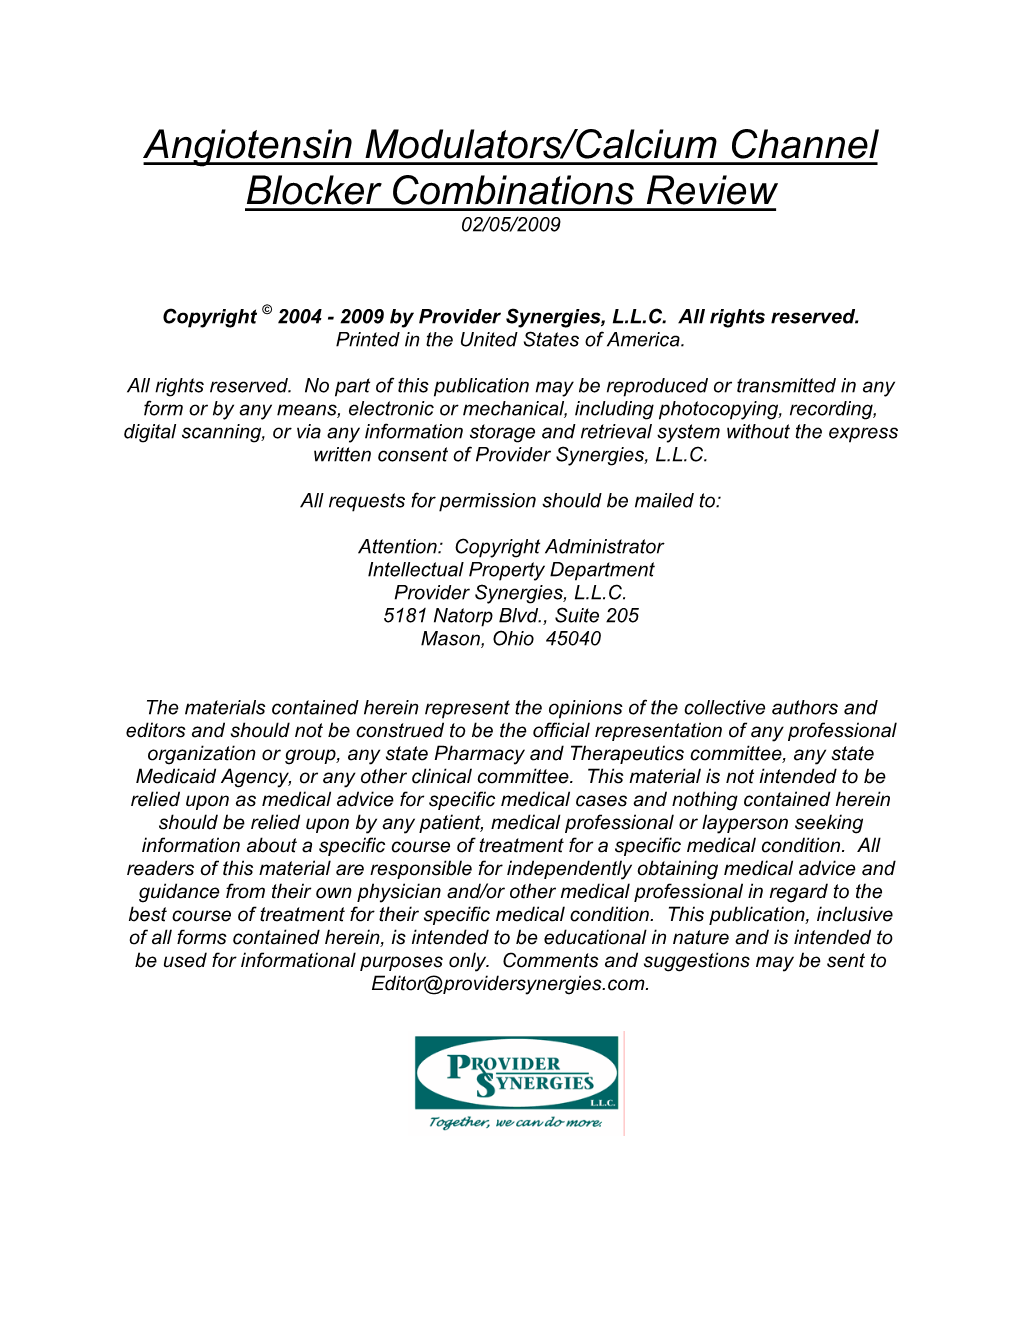 Angiotensin Modulators/Calcium Channel Blocker Combinations Review 02/05/2009